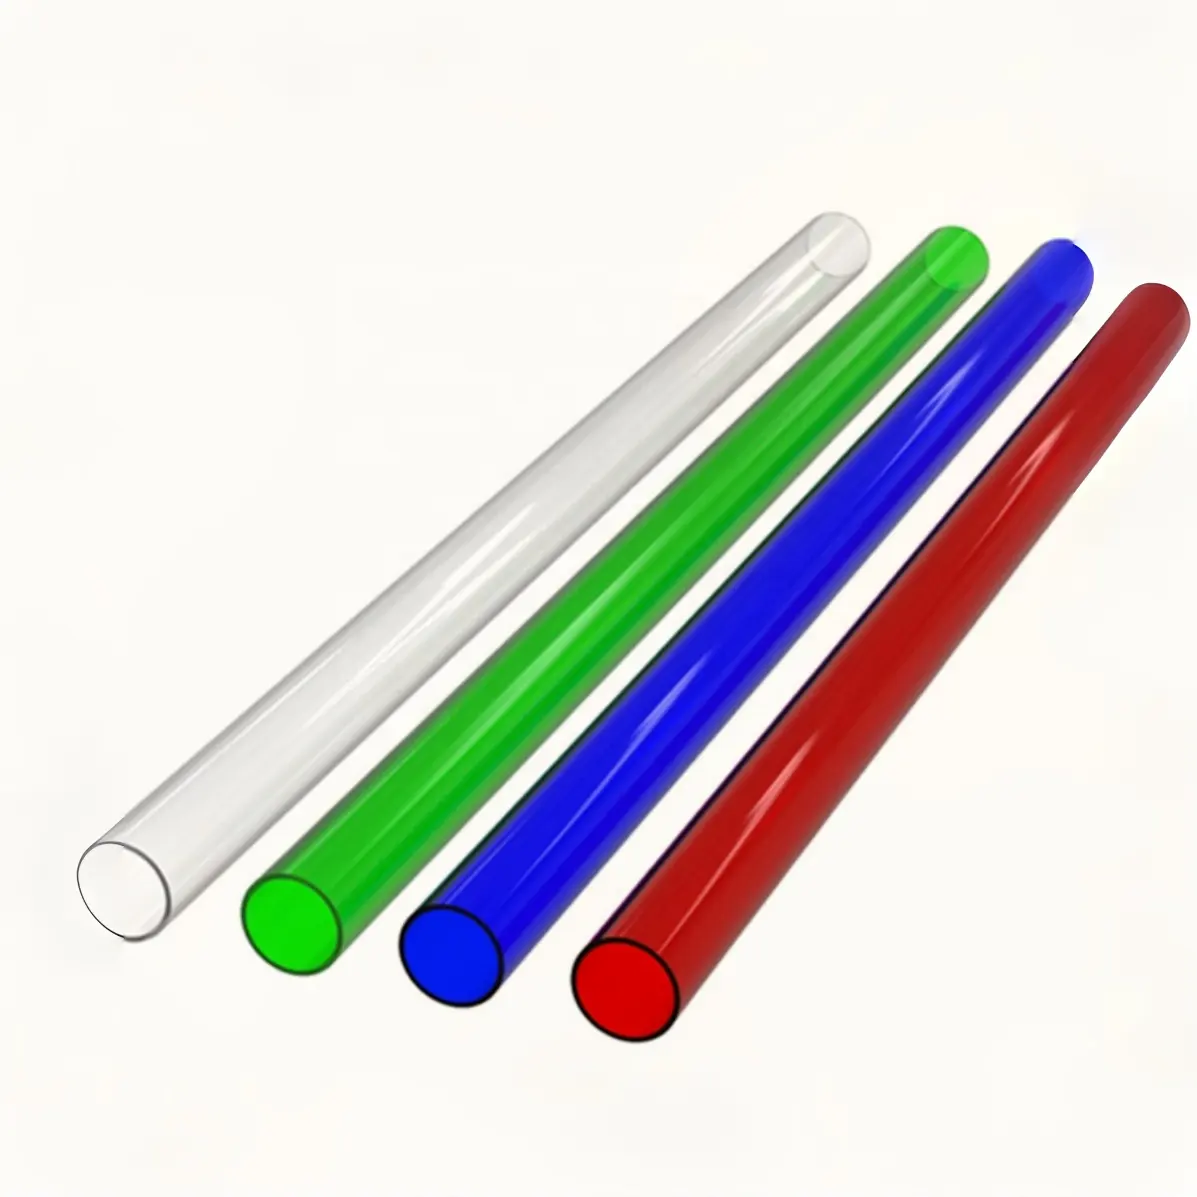 Xinkeda Acryl zuges chnitten orange rot grün blau gefärbte Acryl röhre durchsichtige Kunststoff röhre transparente Plexiglas röhre